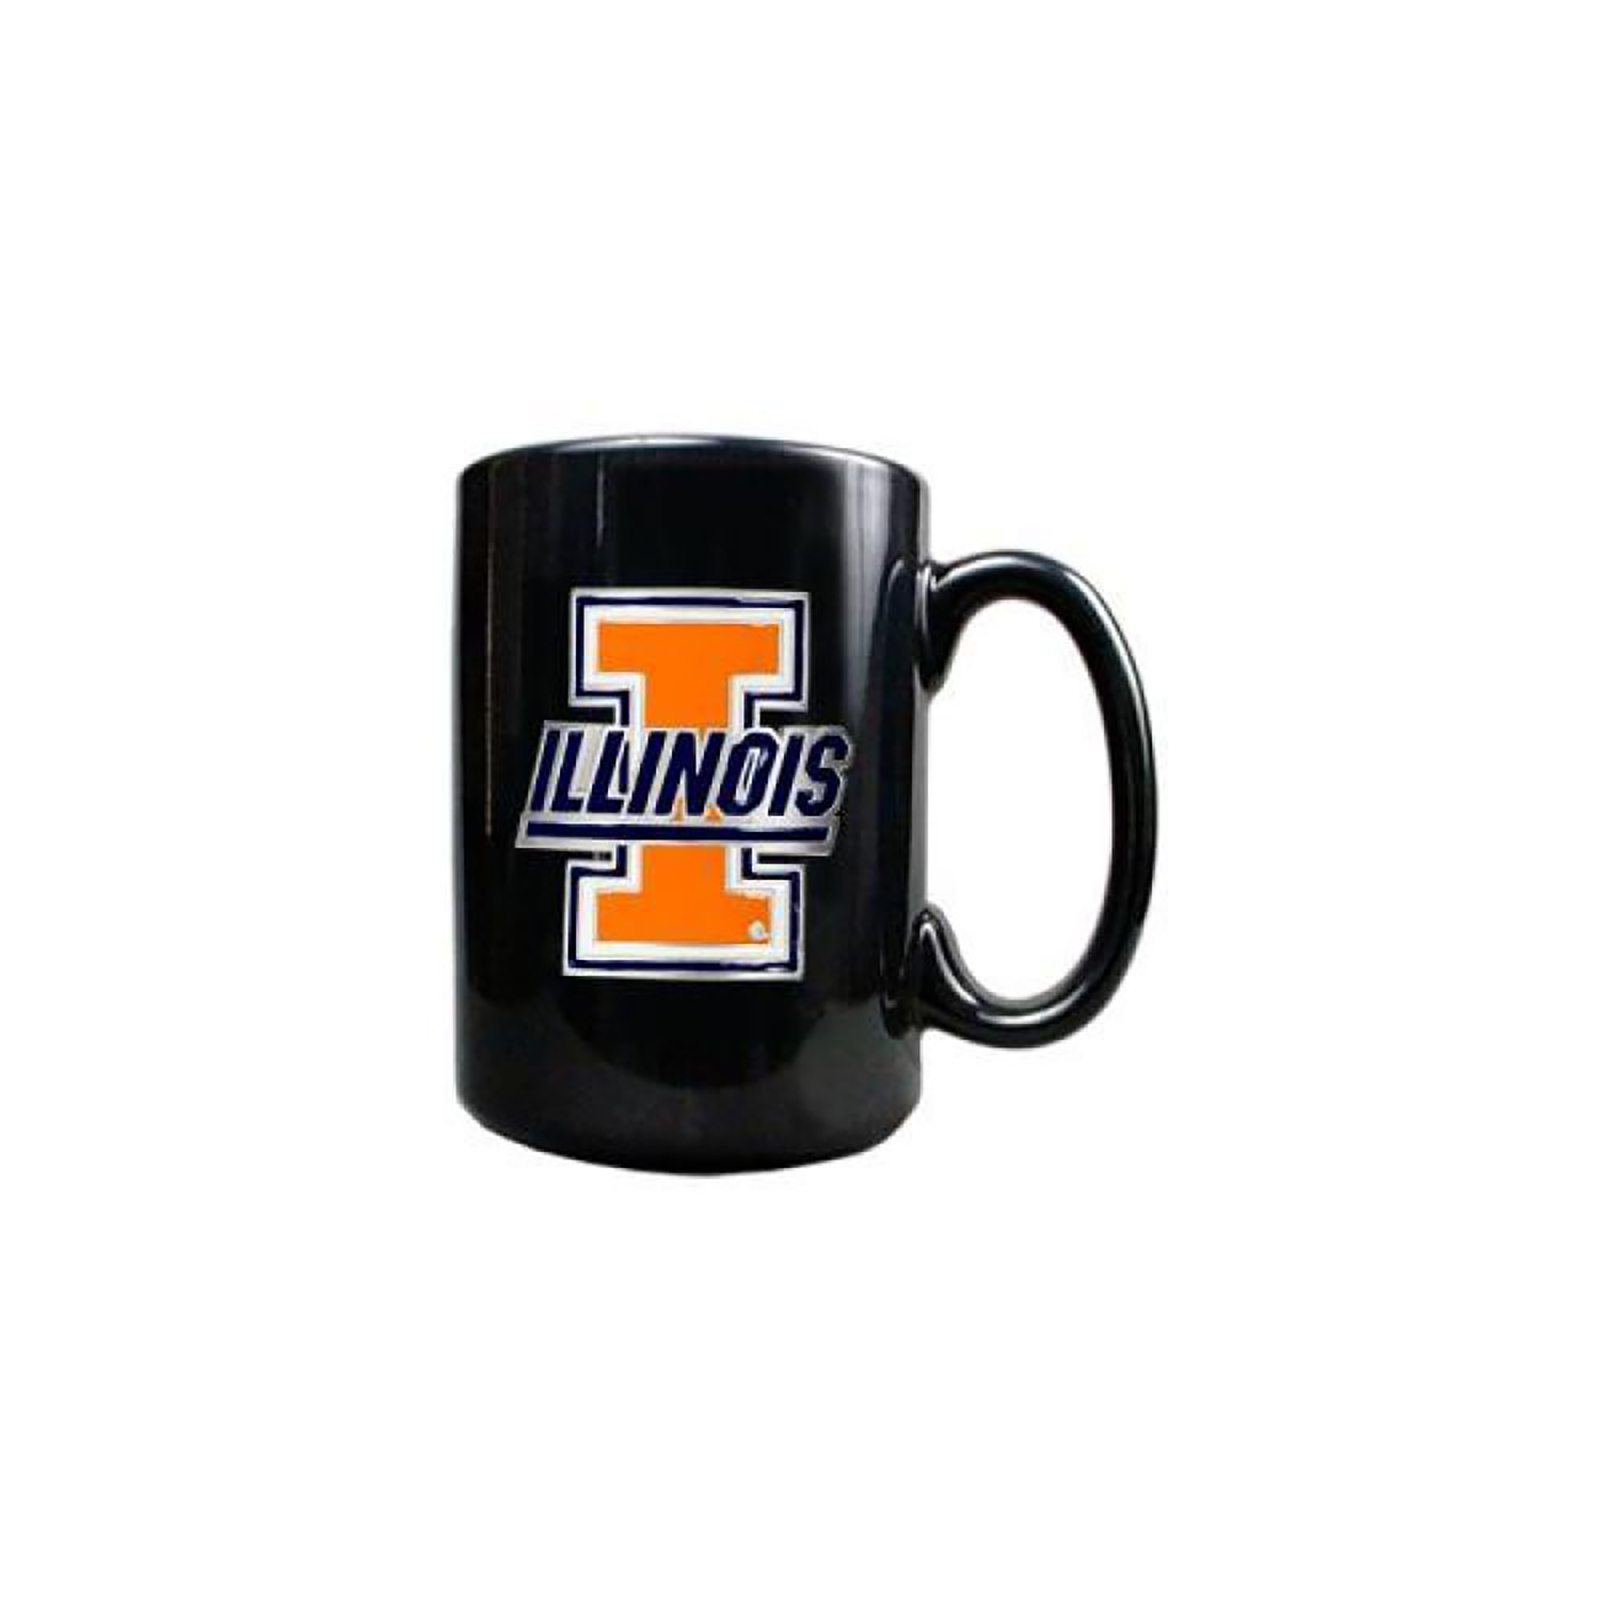 Great American Products 15oz. Illinois Ceramic Mug - Black